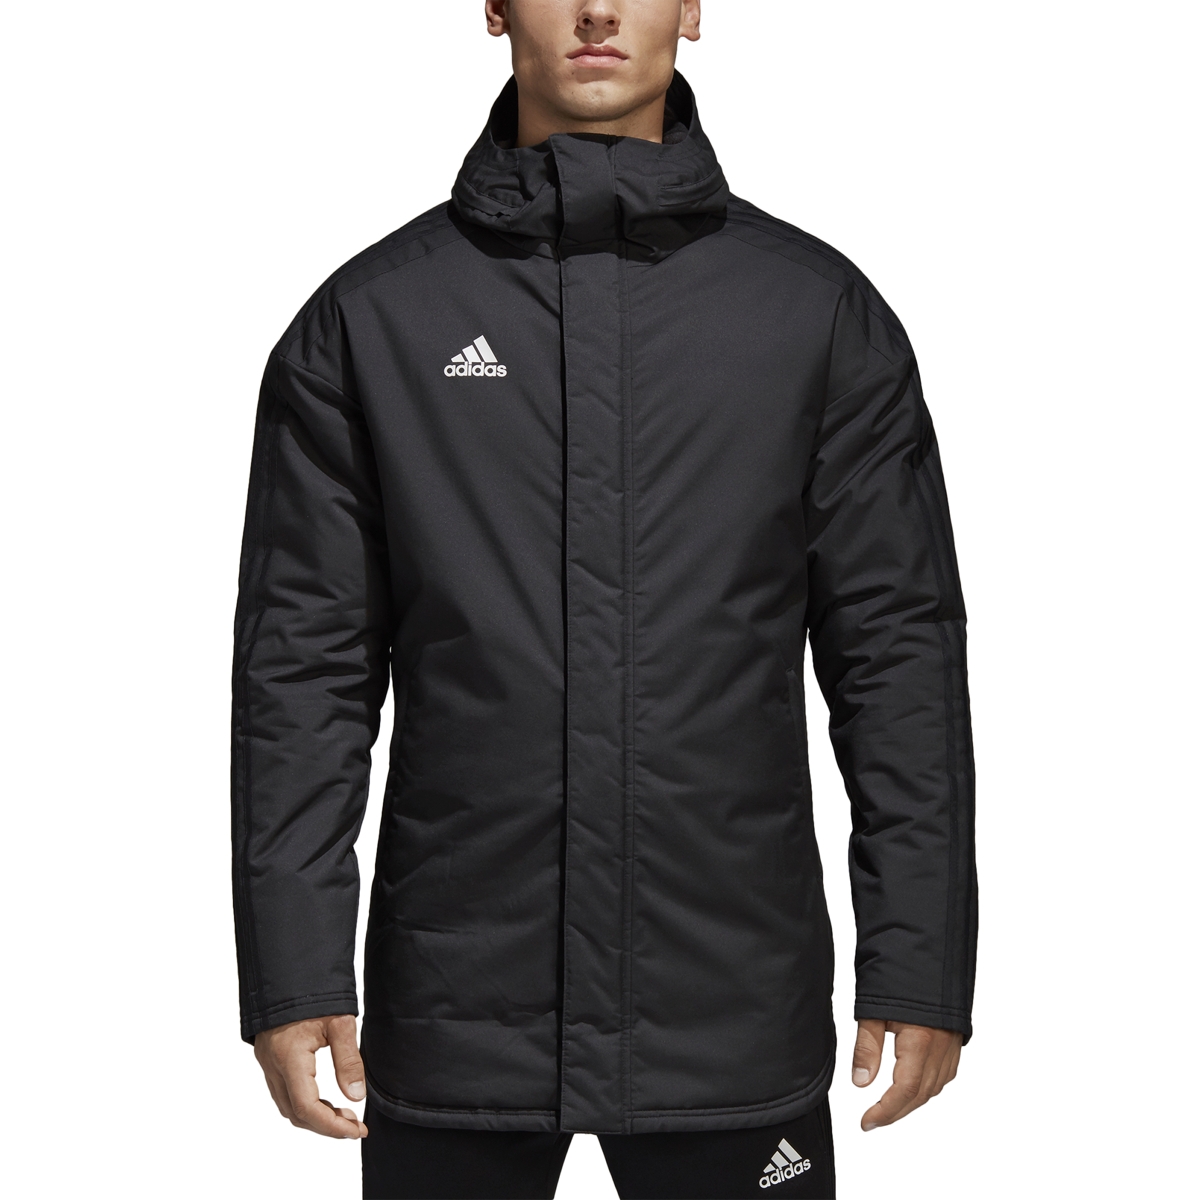 Adidas Jacket 18 Stadium Parka - Soccer Premier